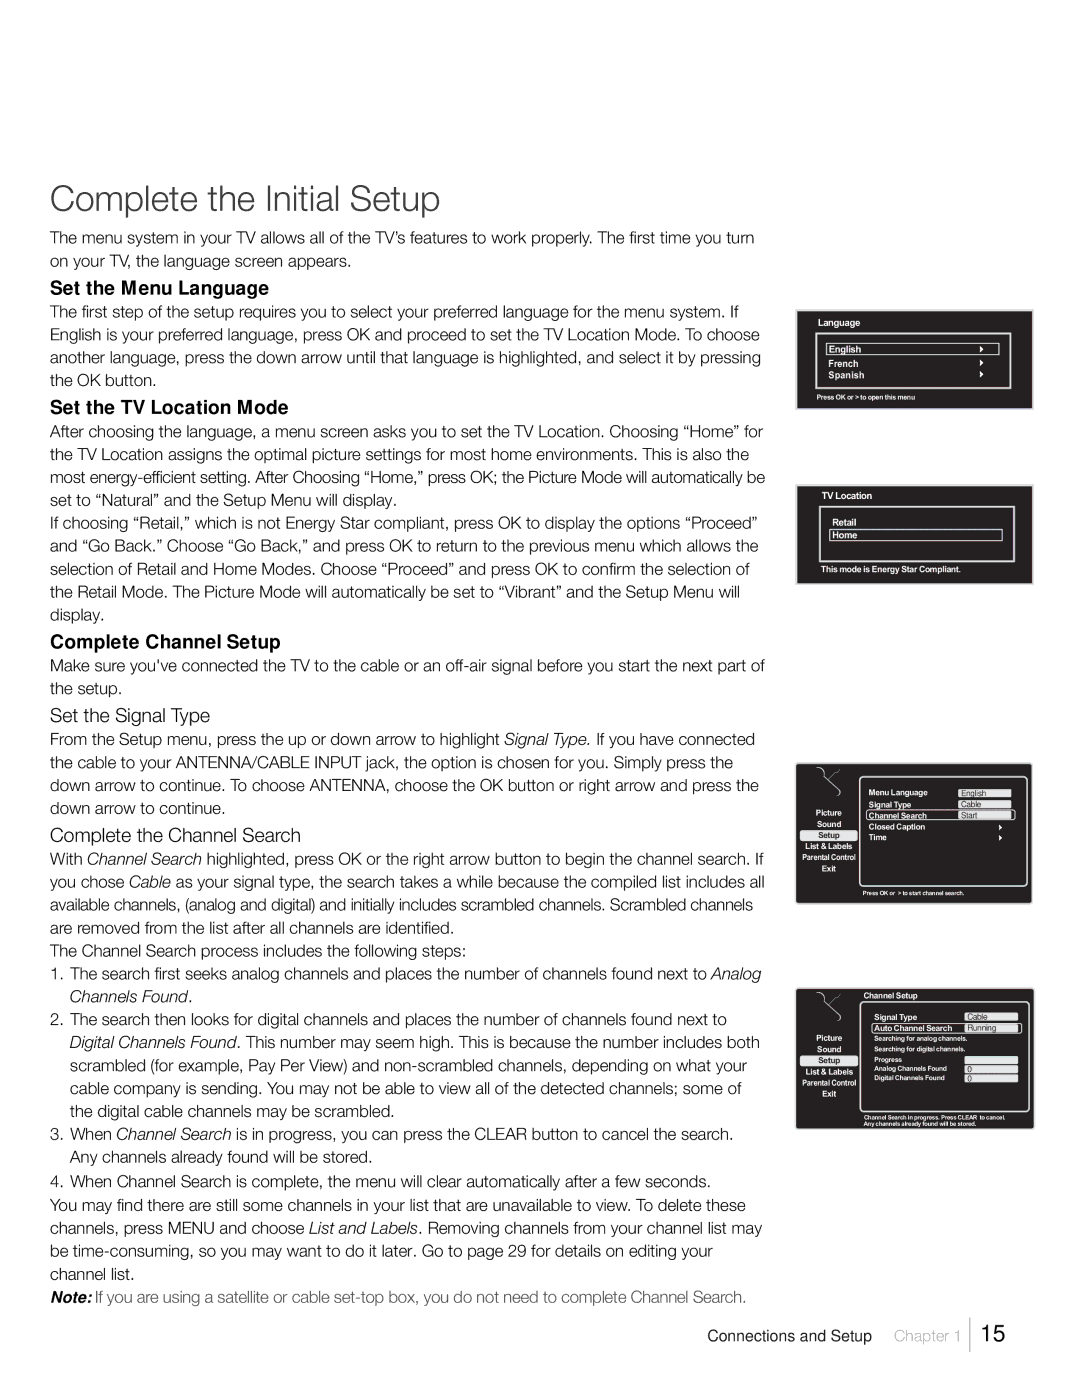 RCA L22HD41V, L26HD31R Complete the Initial Setup, Set the Menu Language, Set the TV Location Mode, Complete Channel Setup 